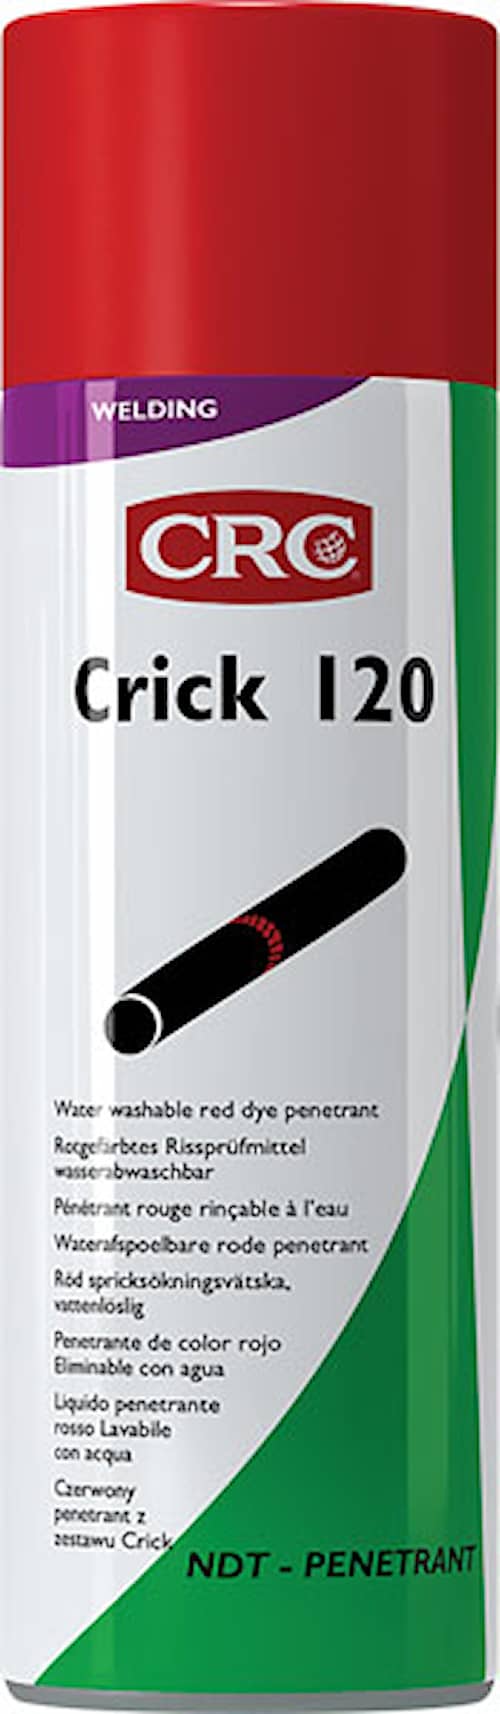 CRC Sprickindikeringsspray Crick 120 indikator 500ml